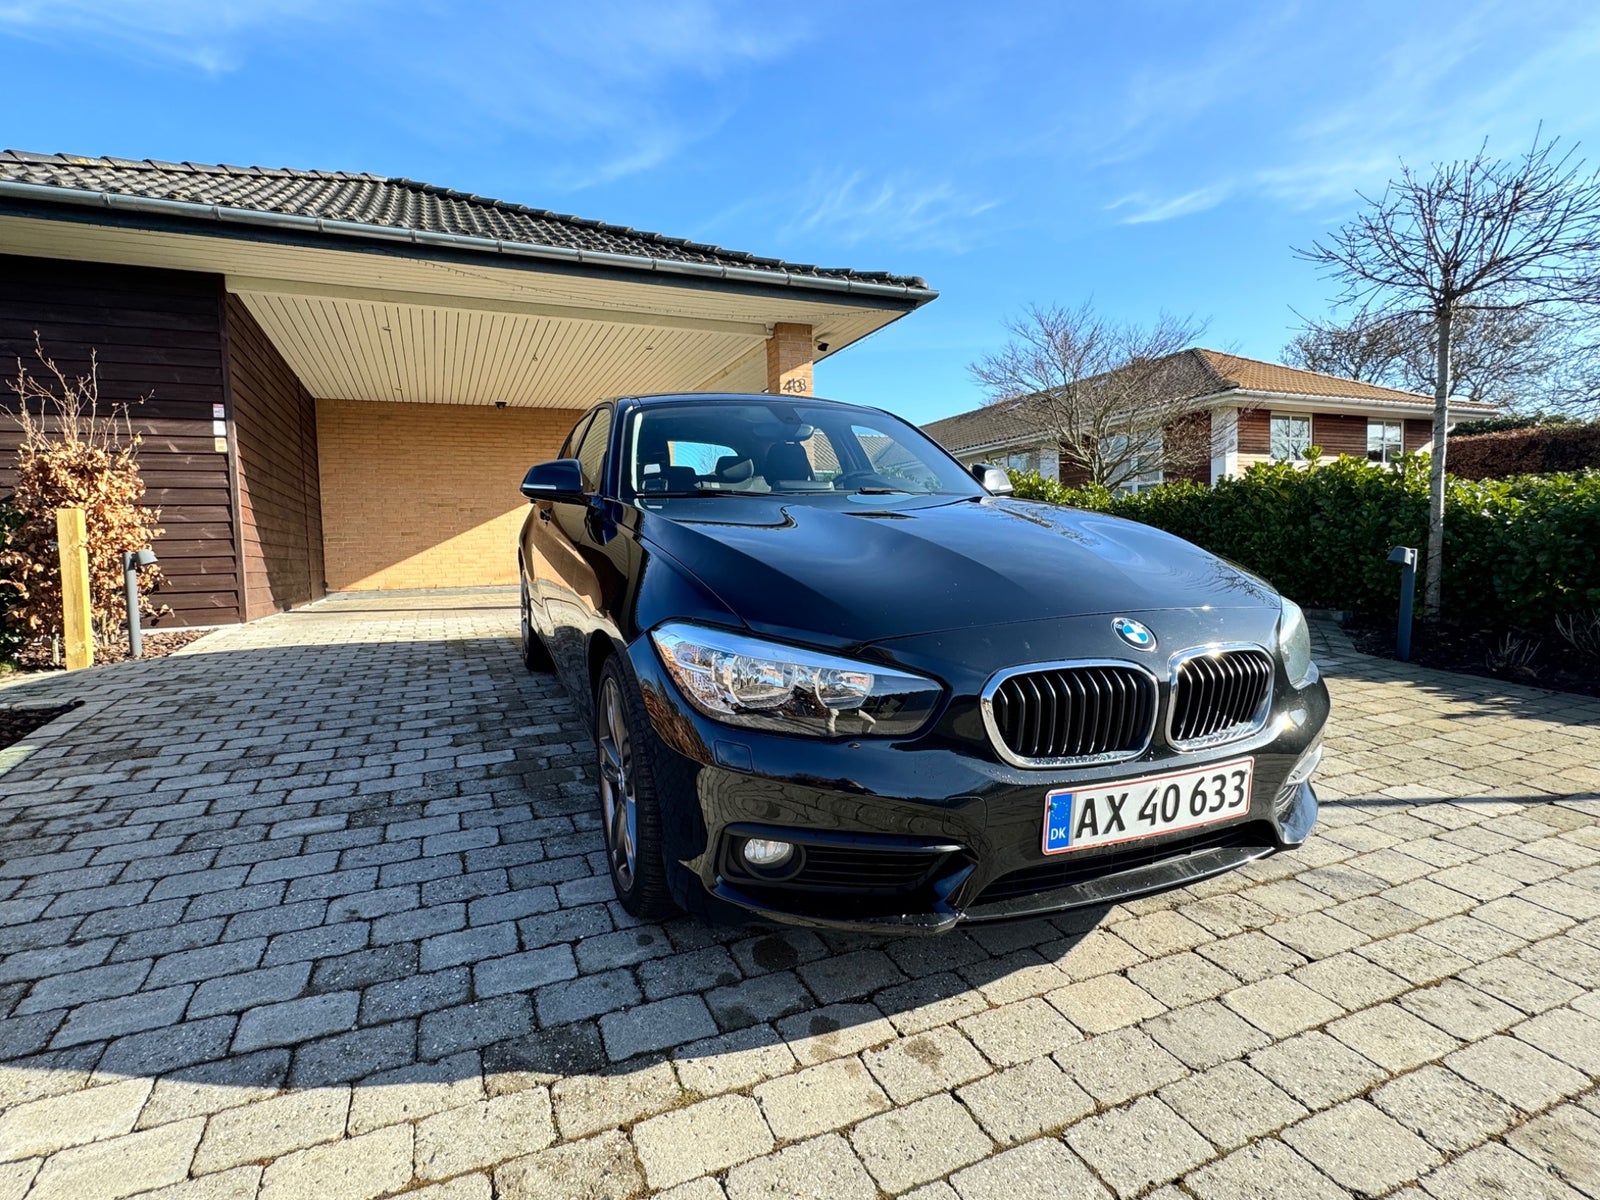 BMW 118d 2,0 Advantage Diesel modelår 2016 km 191000